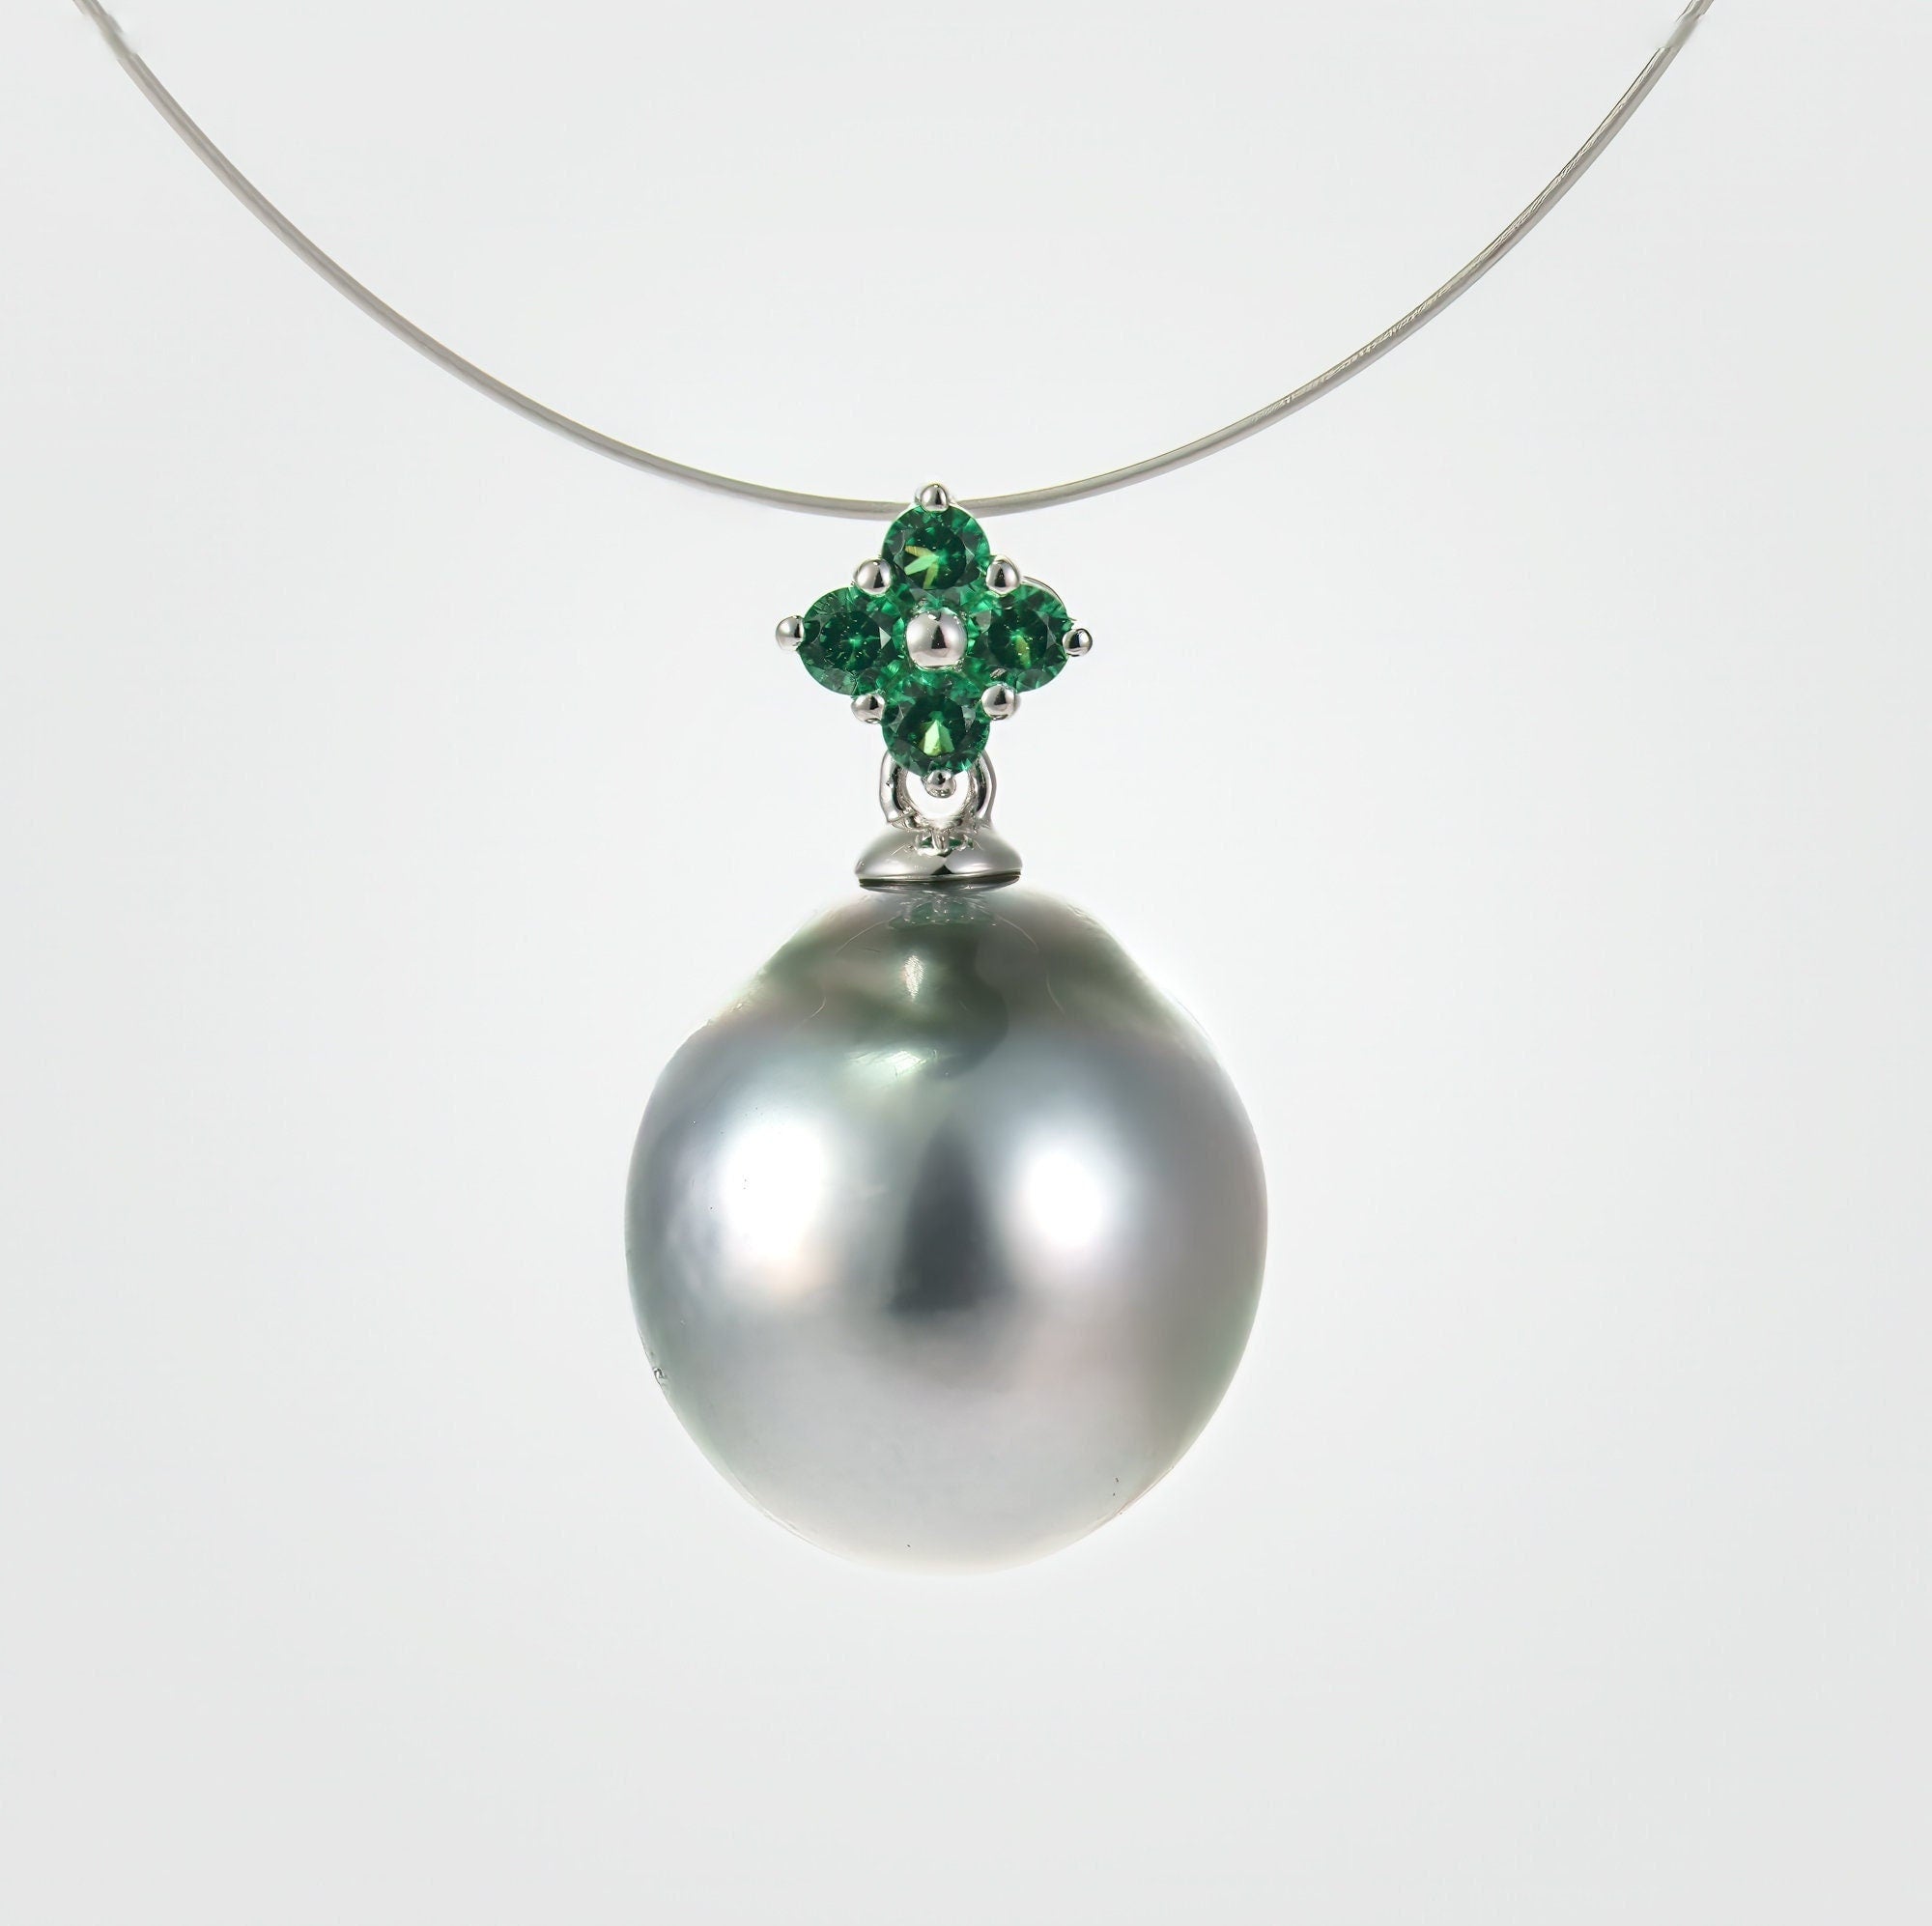 12mm tahitian pearl pendant, 925 sterling silver, rhodium finish, cubic zirconia